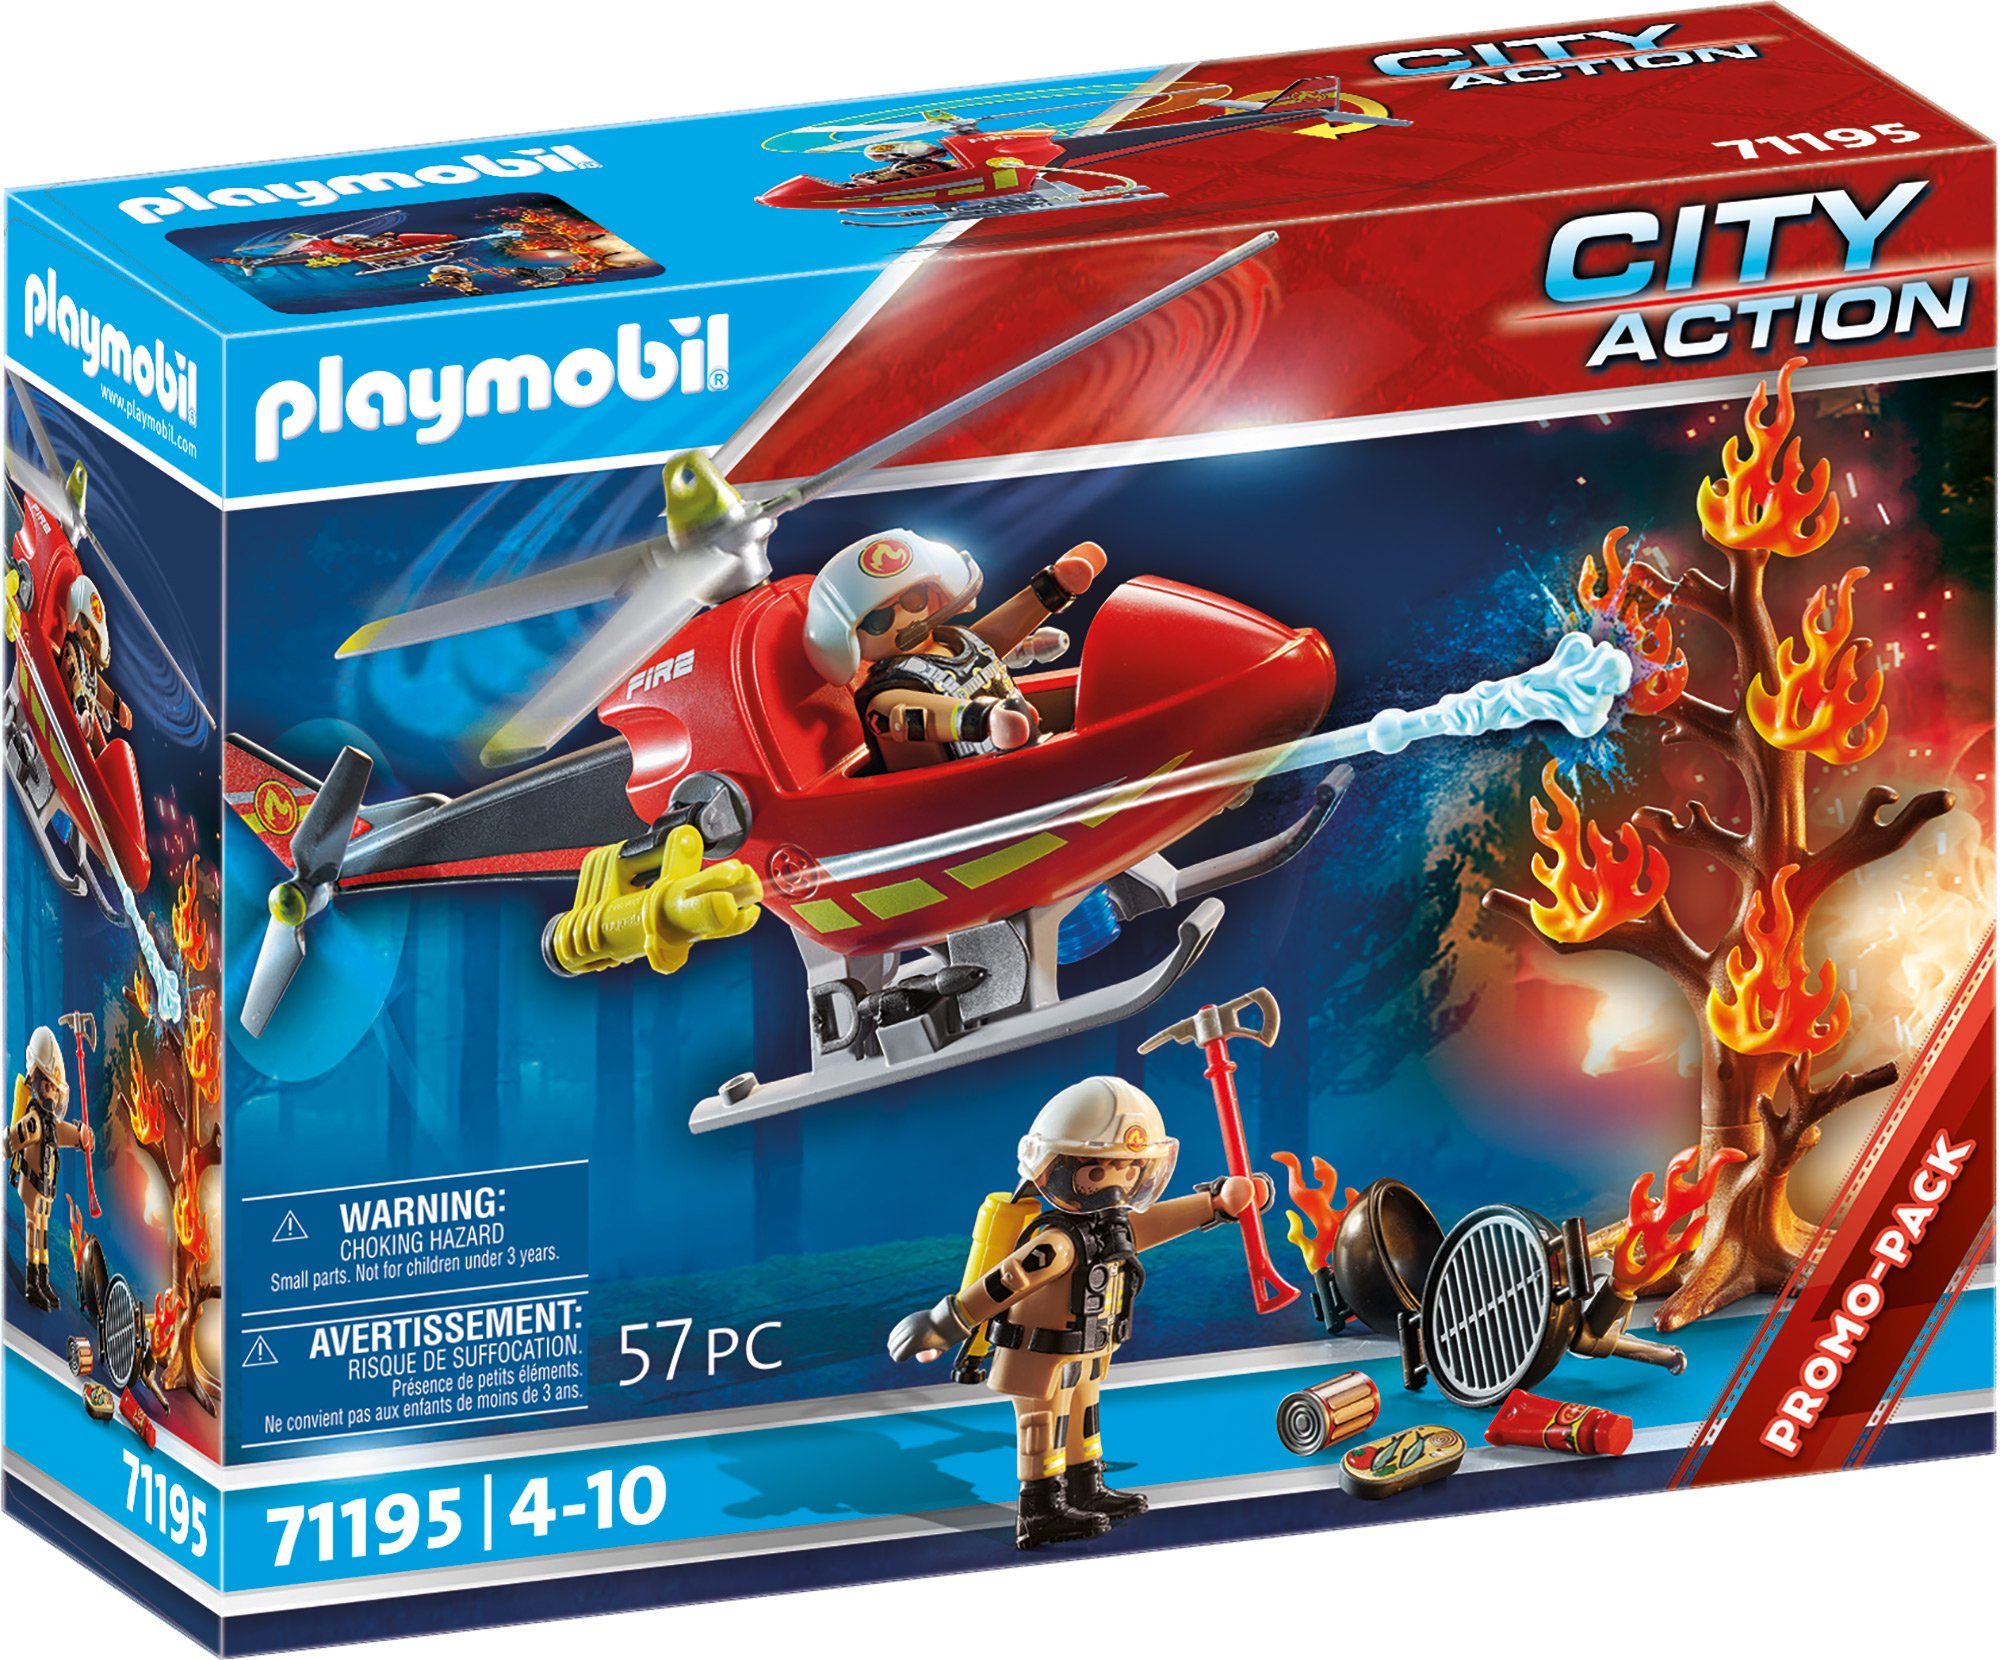 Playmobil® Konstruktions-Spielset Feuerwehr-Hubschrauber (71195), City Action, (57 St), Made in Germany